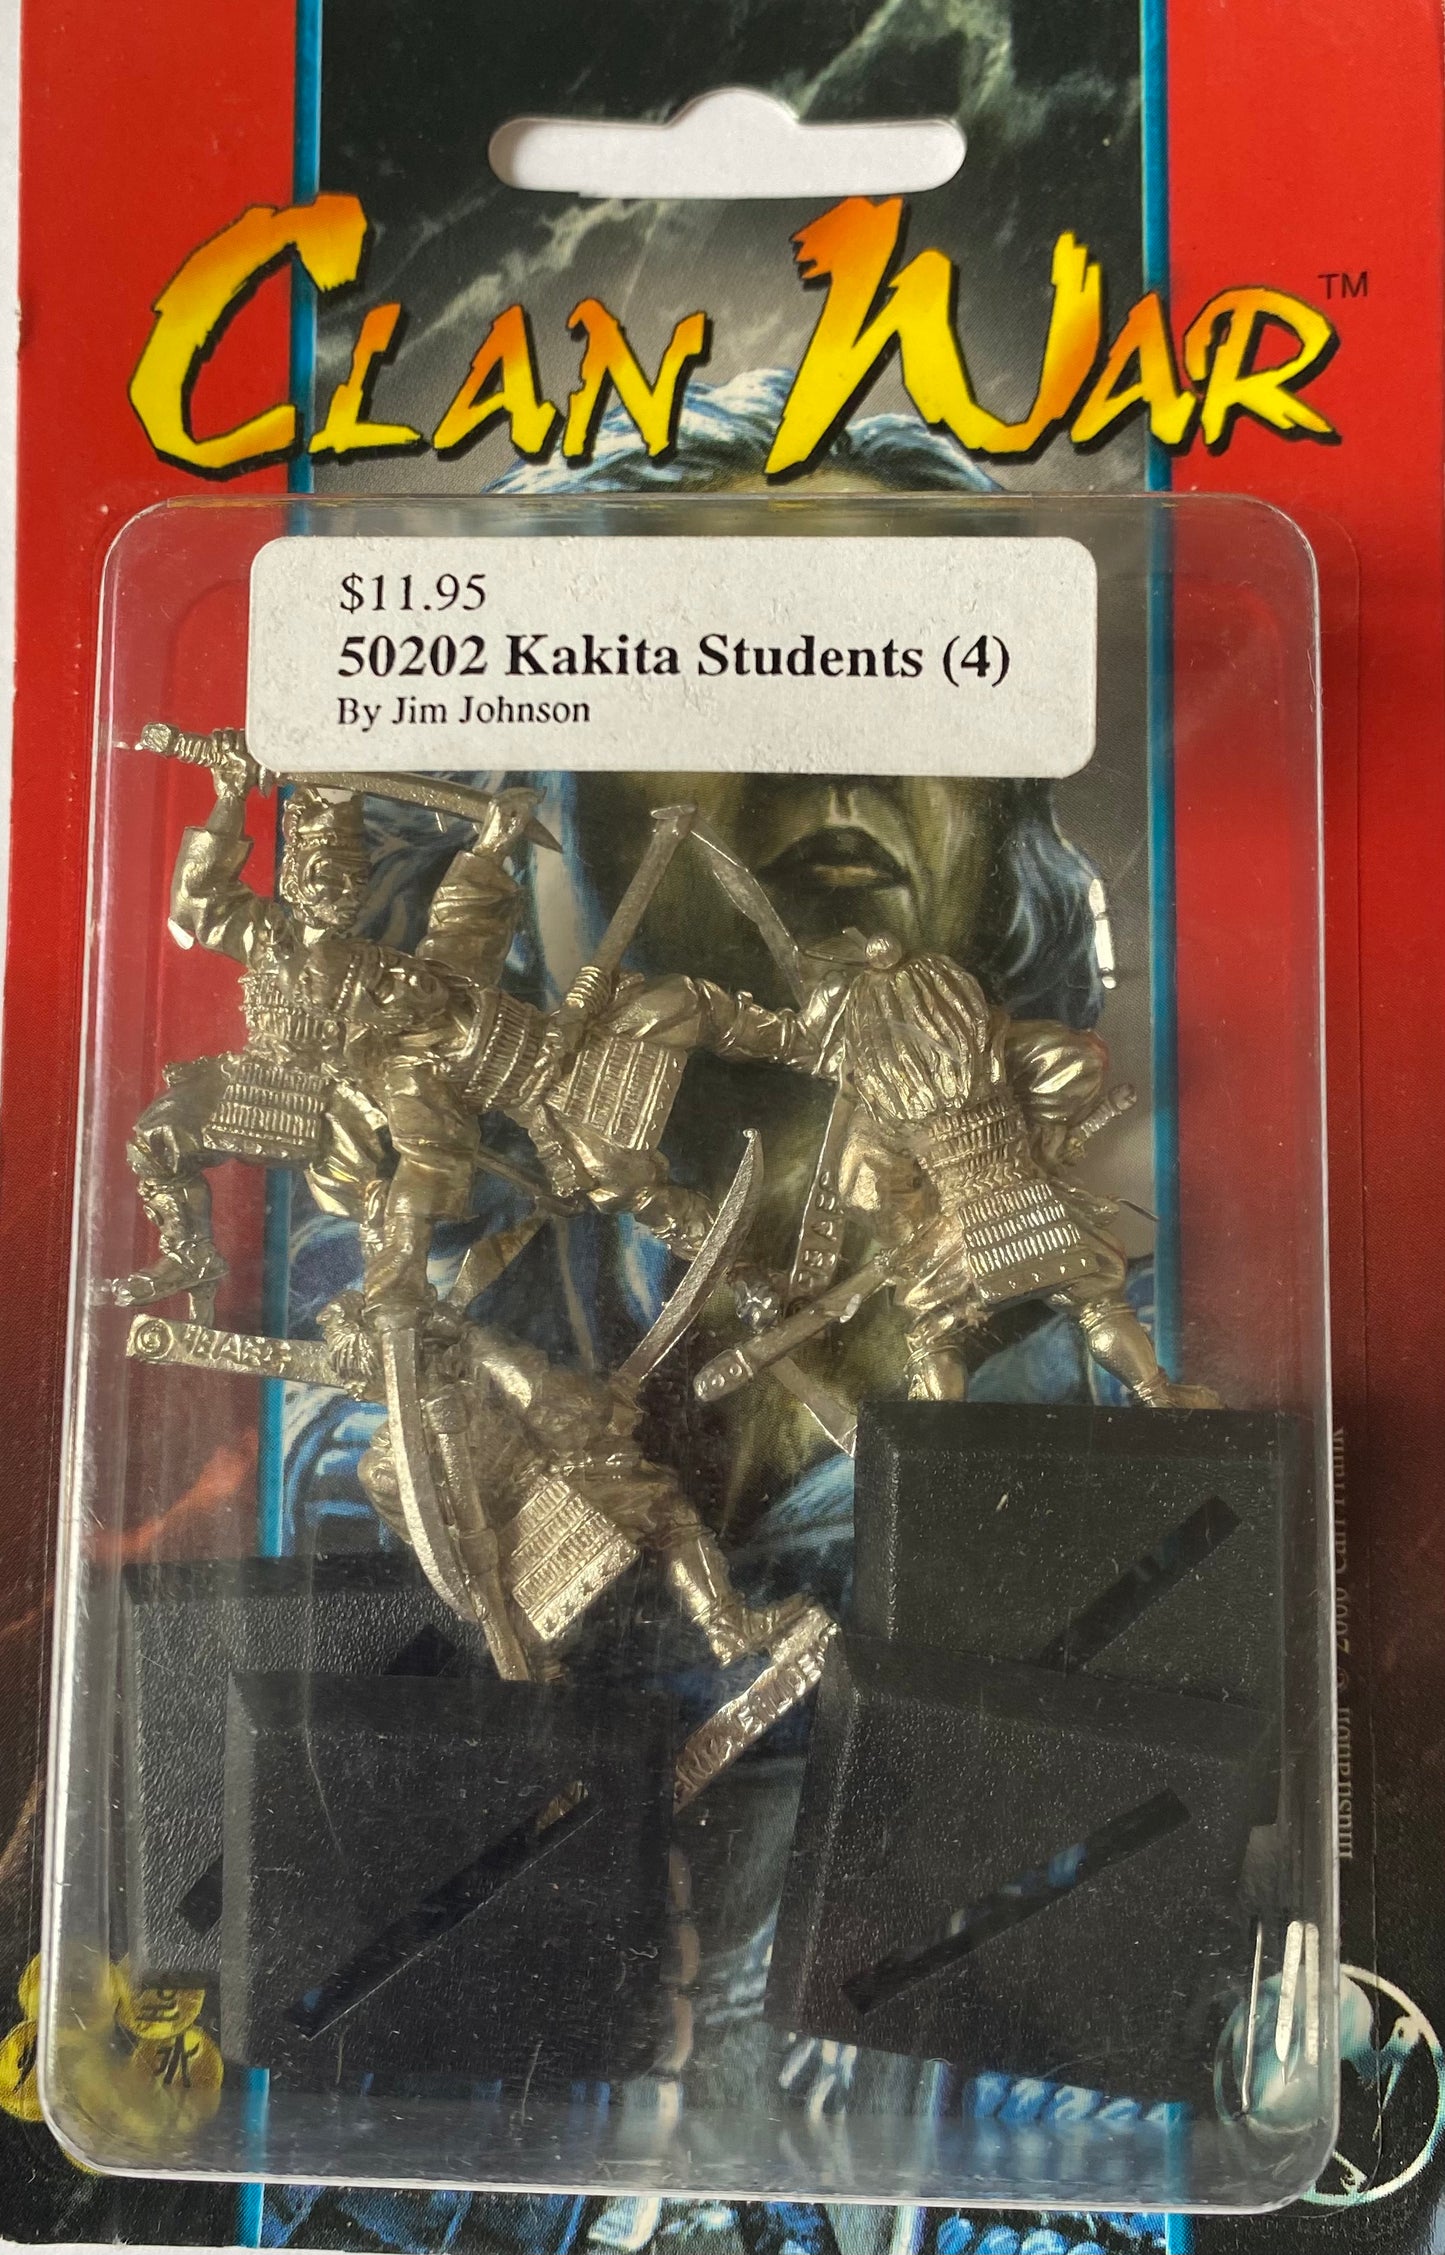 50202 Kakita Students (4) by Jim Johnson